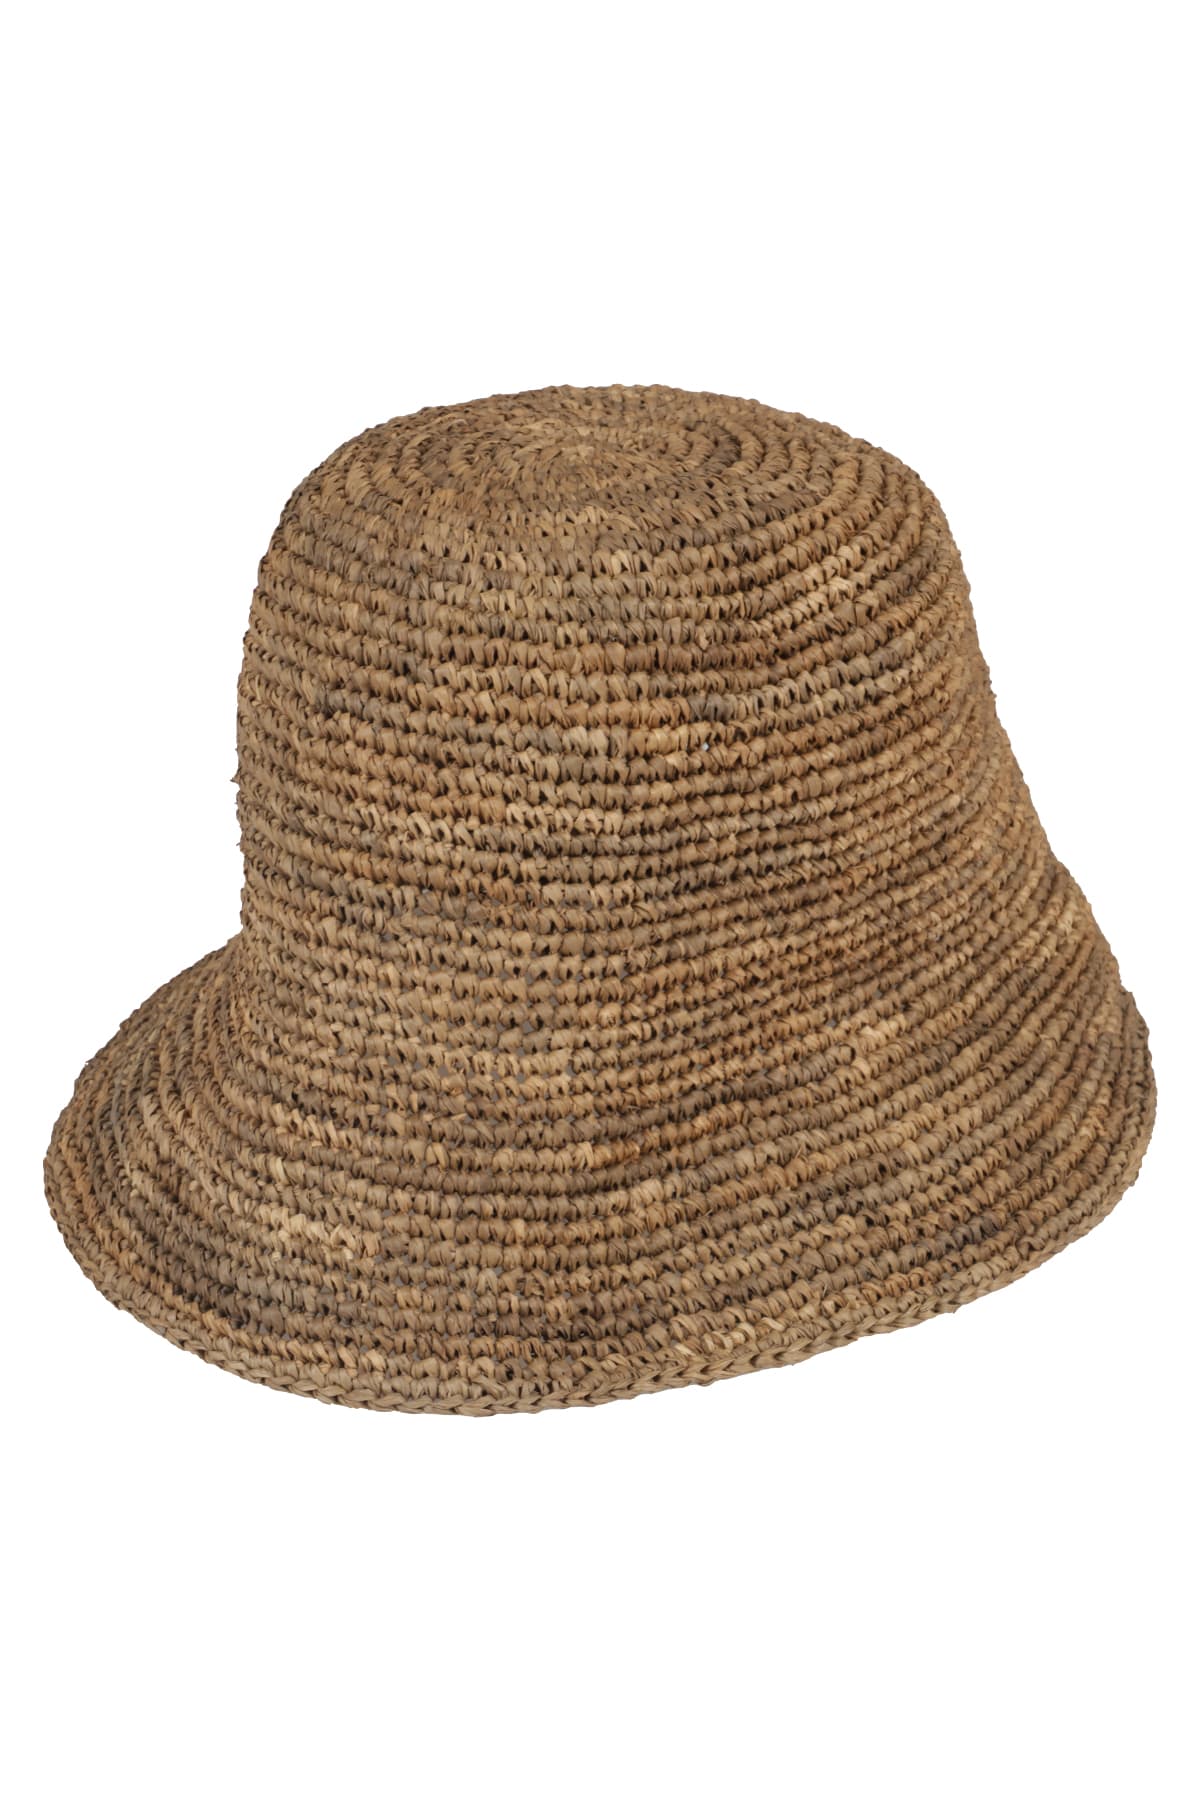 IBELIV HATS